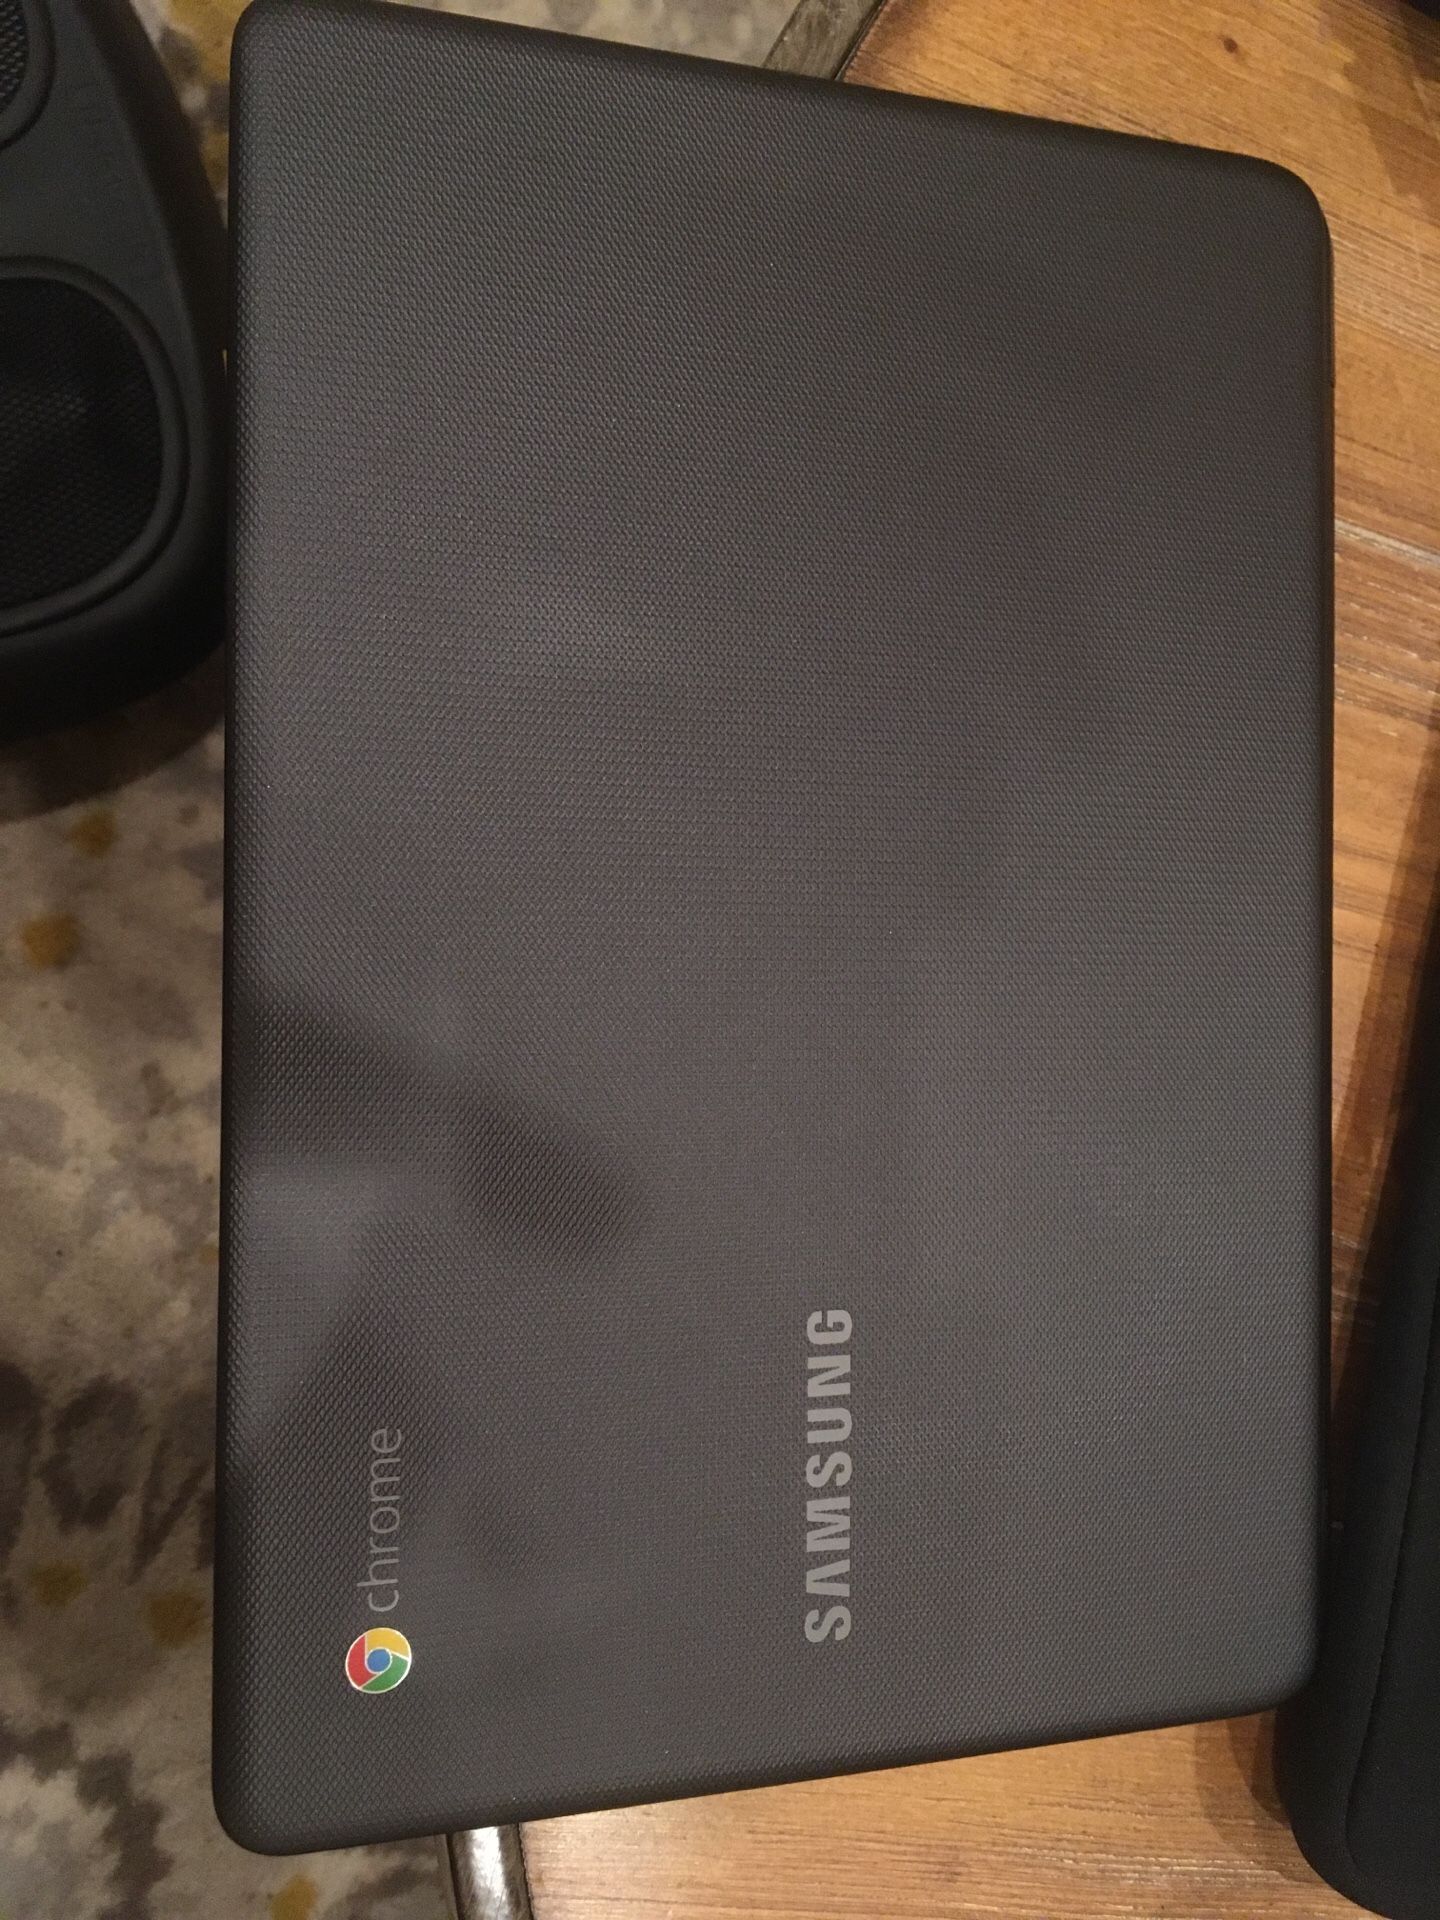 Samsung Chromebook barely used